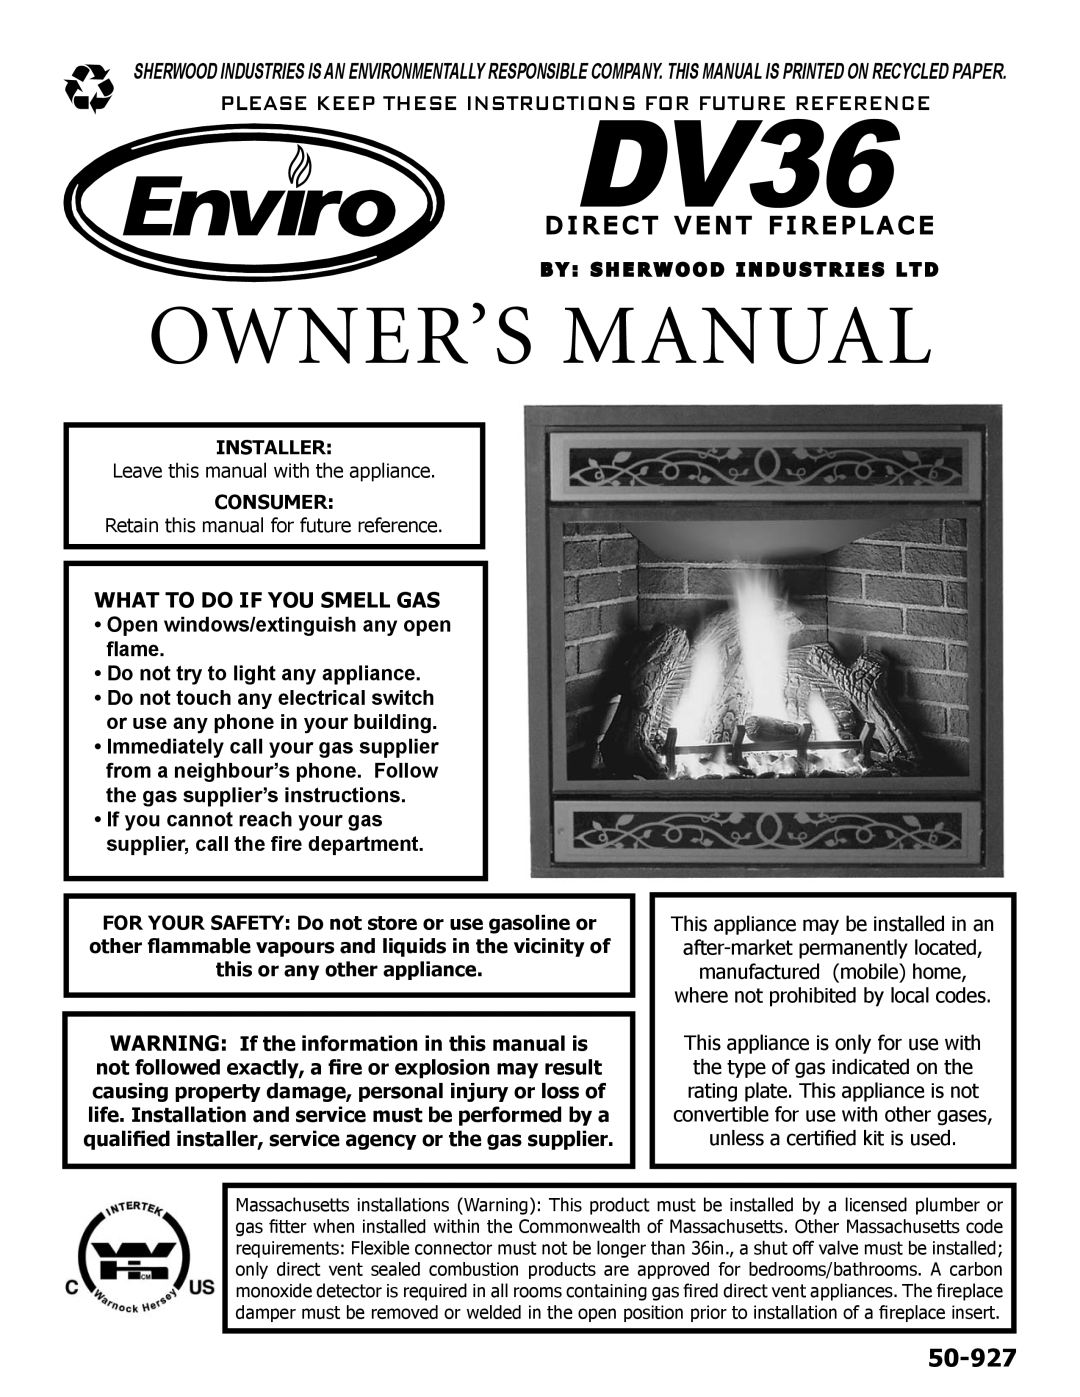 Enviro C-11275 owner manual What To Do If You Smell Gas, Installer, Consumer, 50-927, D Ir Ec T V En T Fir Ep La C E 